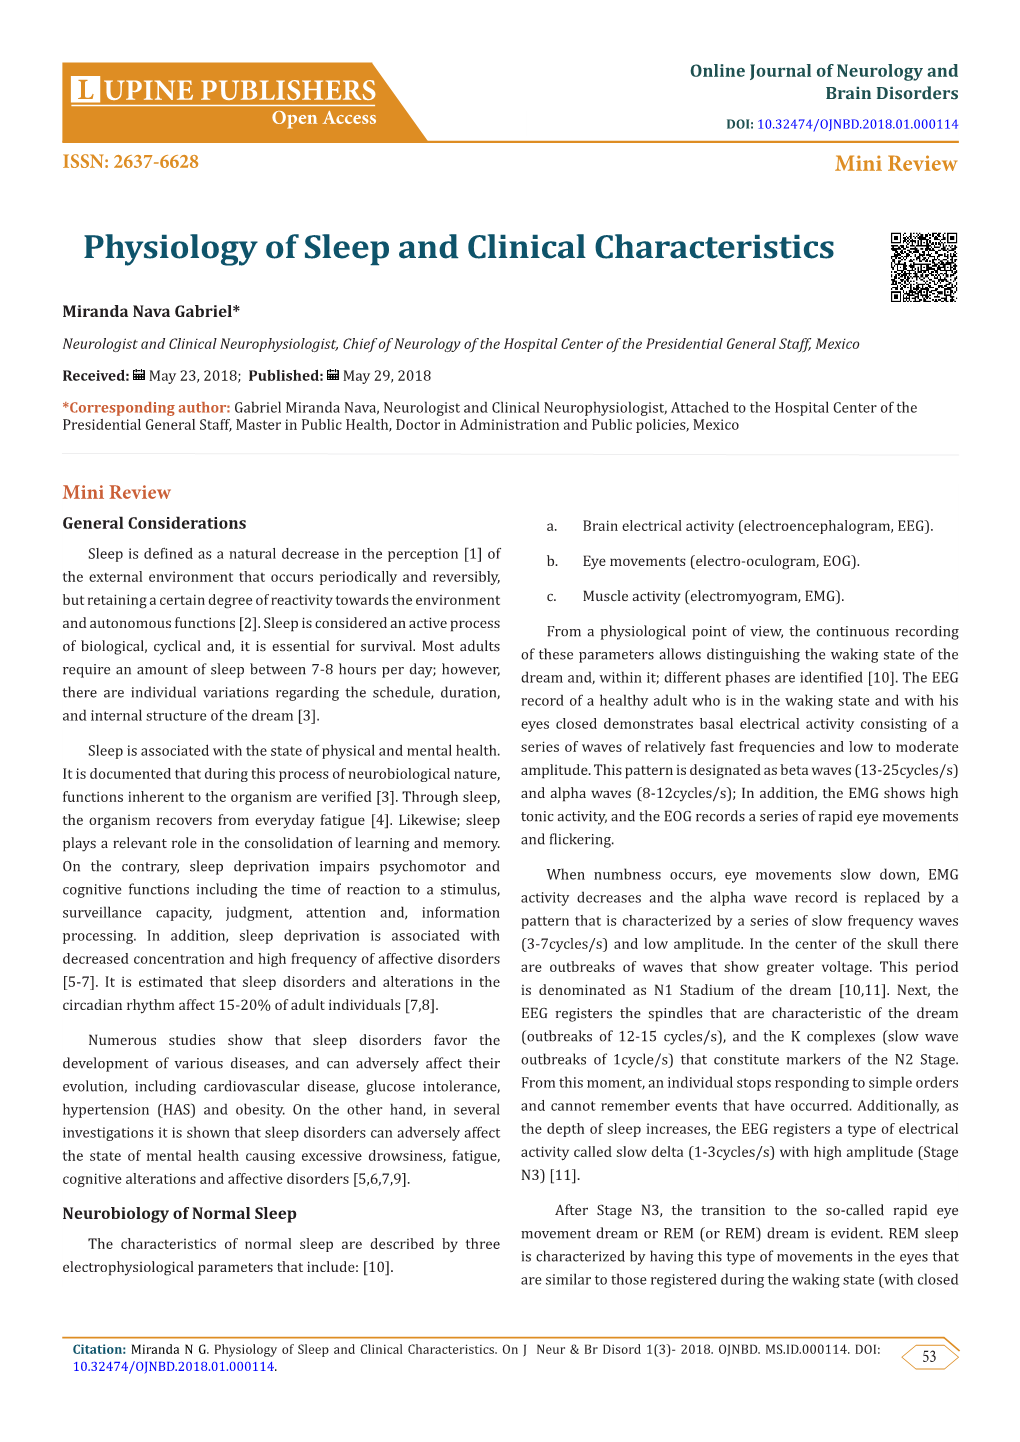 Physiology of Sleep and Clinical Characteristics